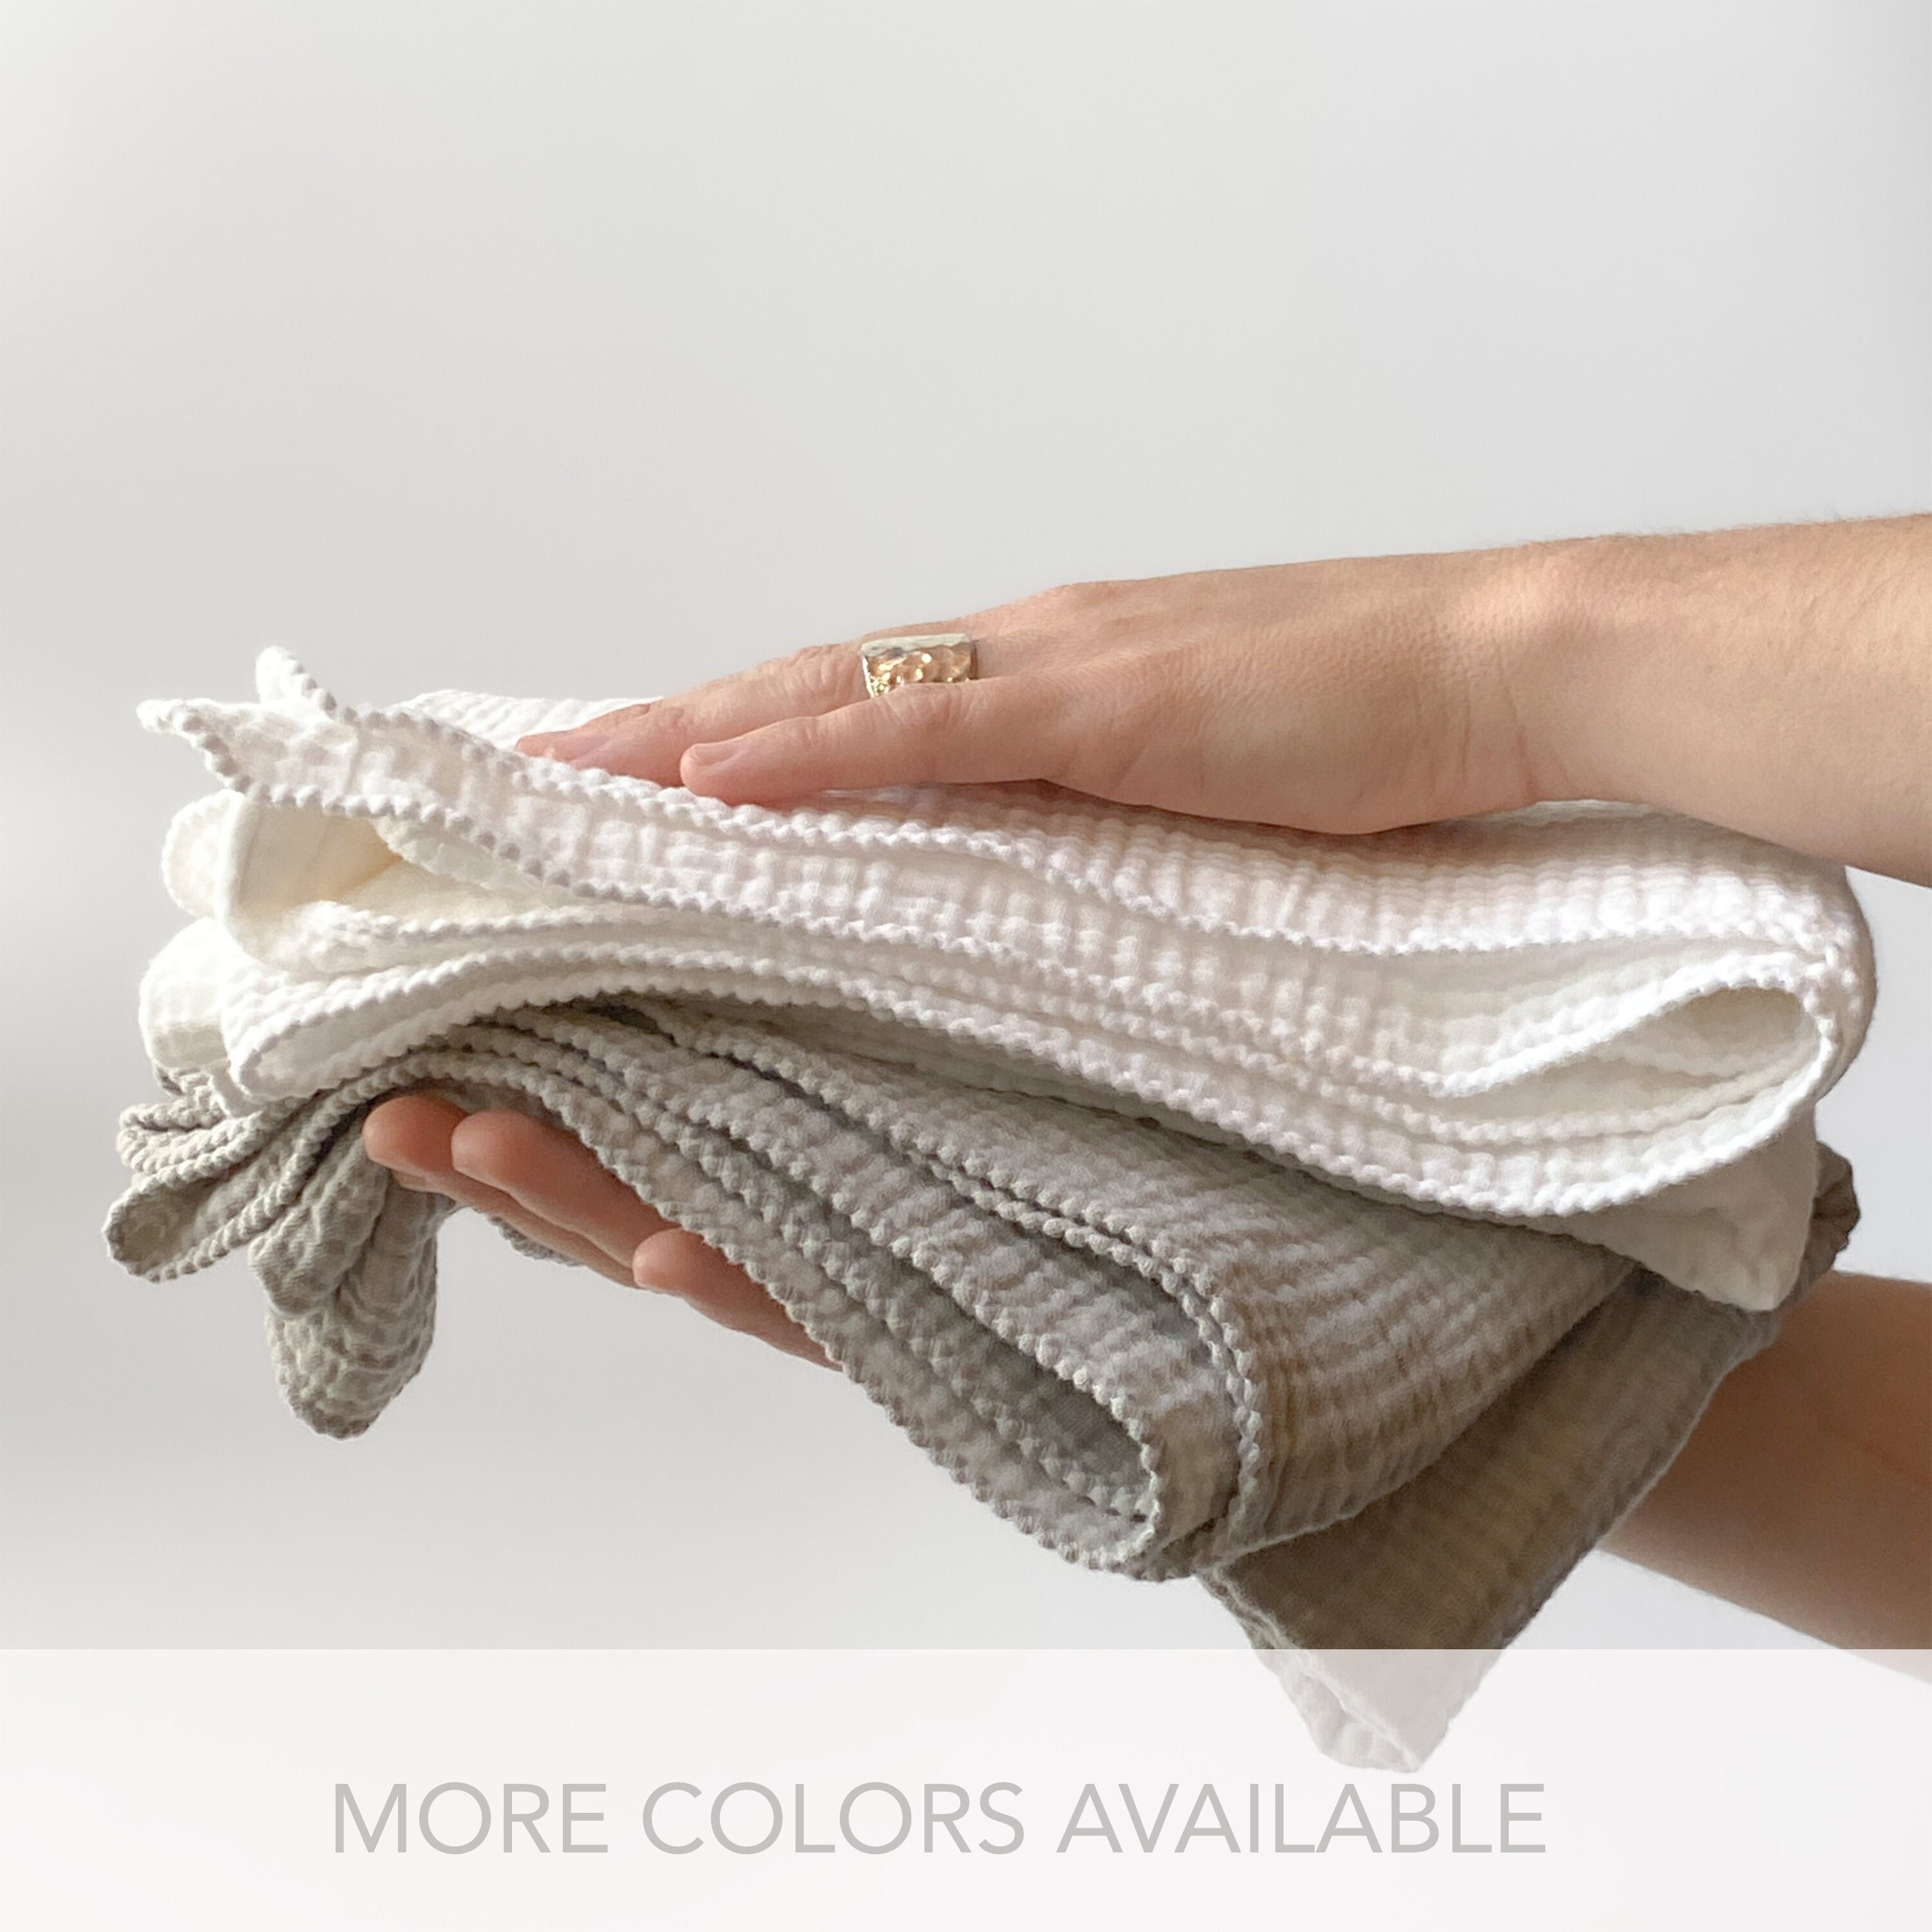 THIN Gauze Kitchen TOWEL / Hand Towel 16X26 / Best Kitchen Towel / Simple  Cotton Tea Towel / Absorbent Dish Towel / Quick Drying Towel 